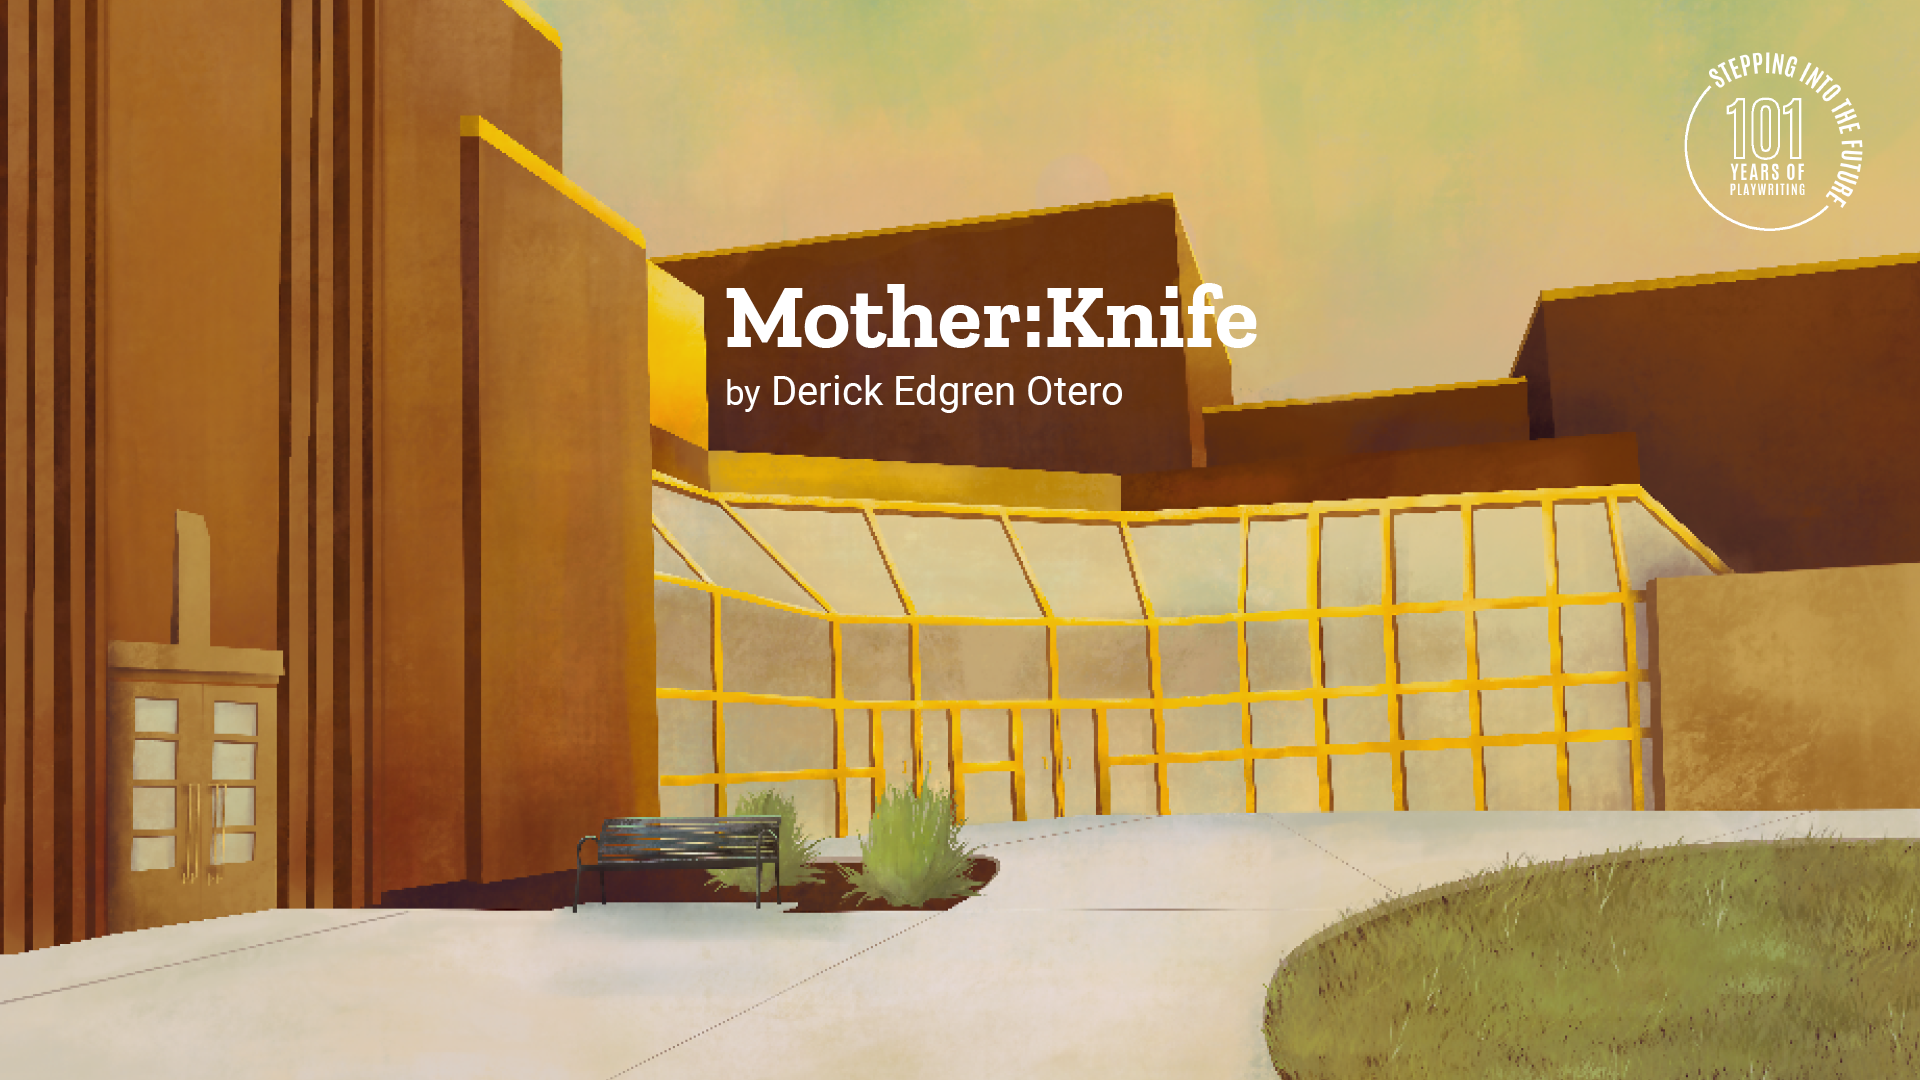 Mother:Knife